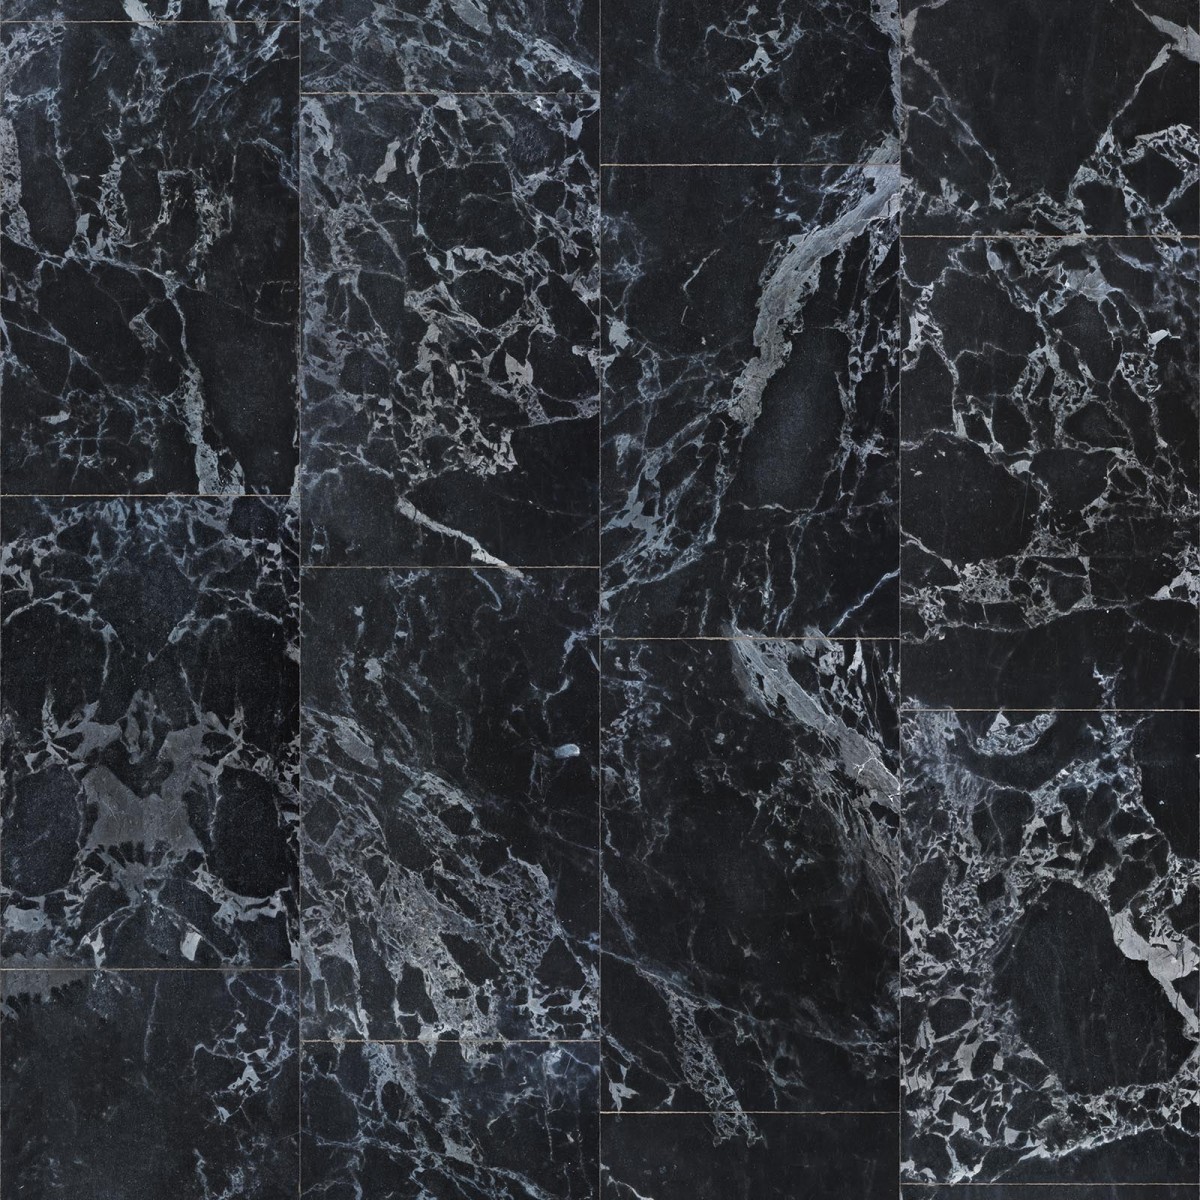 Tapet designer Materials Marble, Tiles 48.7x76.9cm, Black by Piet Hein Eek, NLXL, 4.9mp / rola, Tapet Exclusivist 